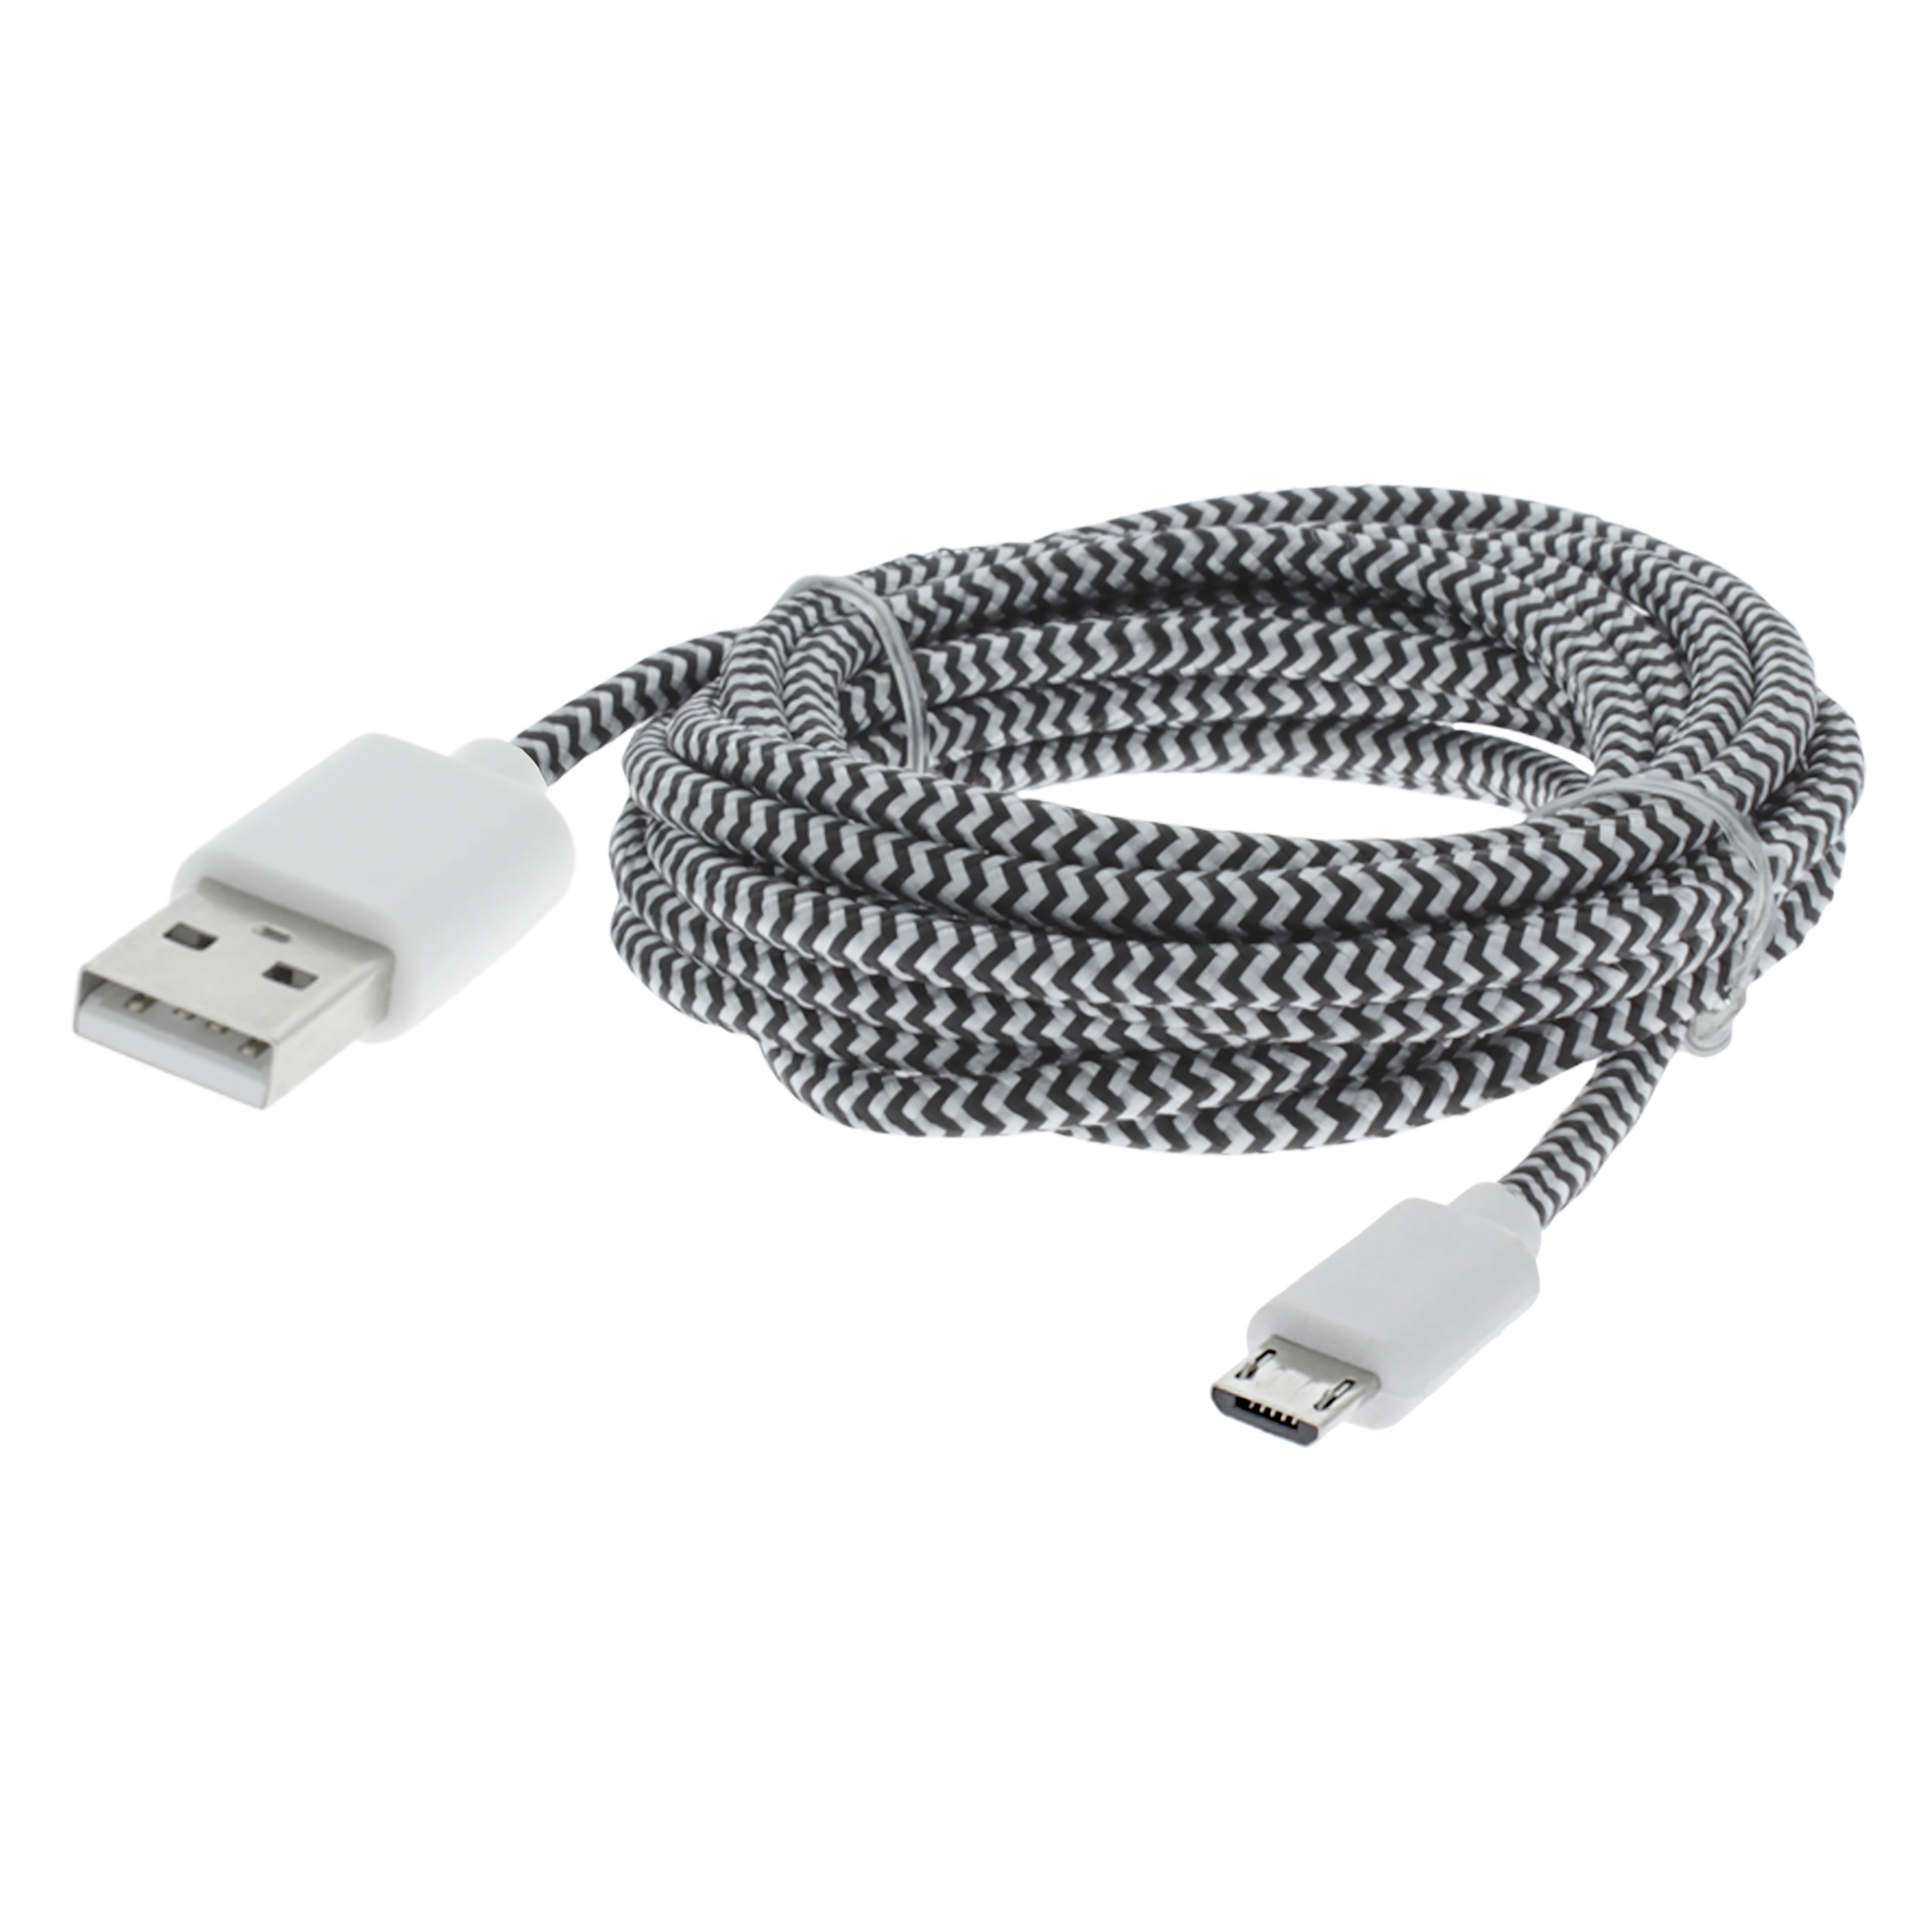 00.137.01 Q-Link  datakabel USB - Micro USB - 2 m - zwart/wit